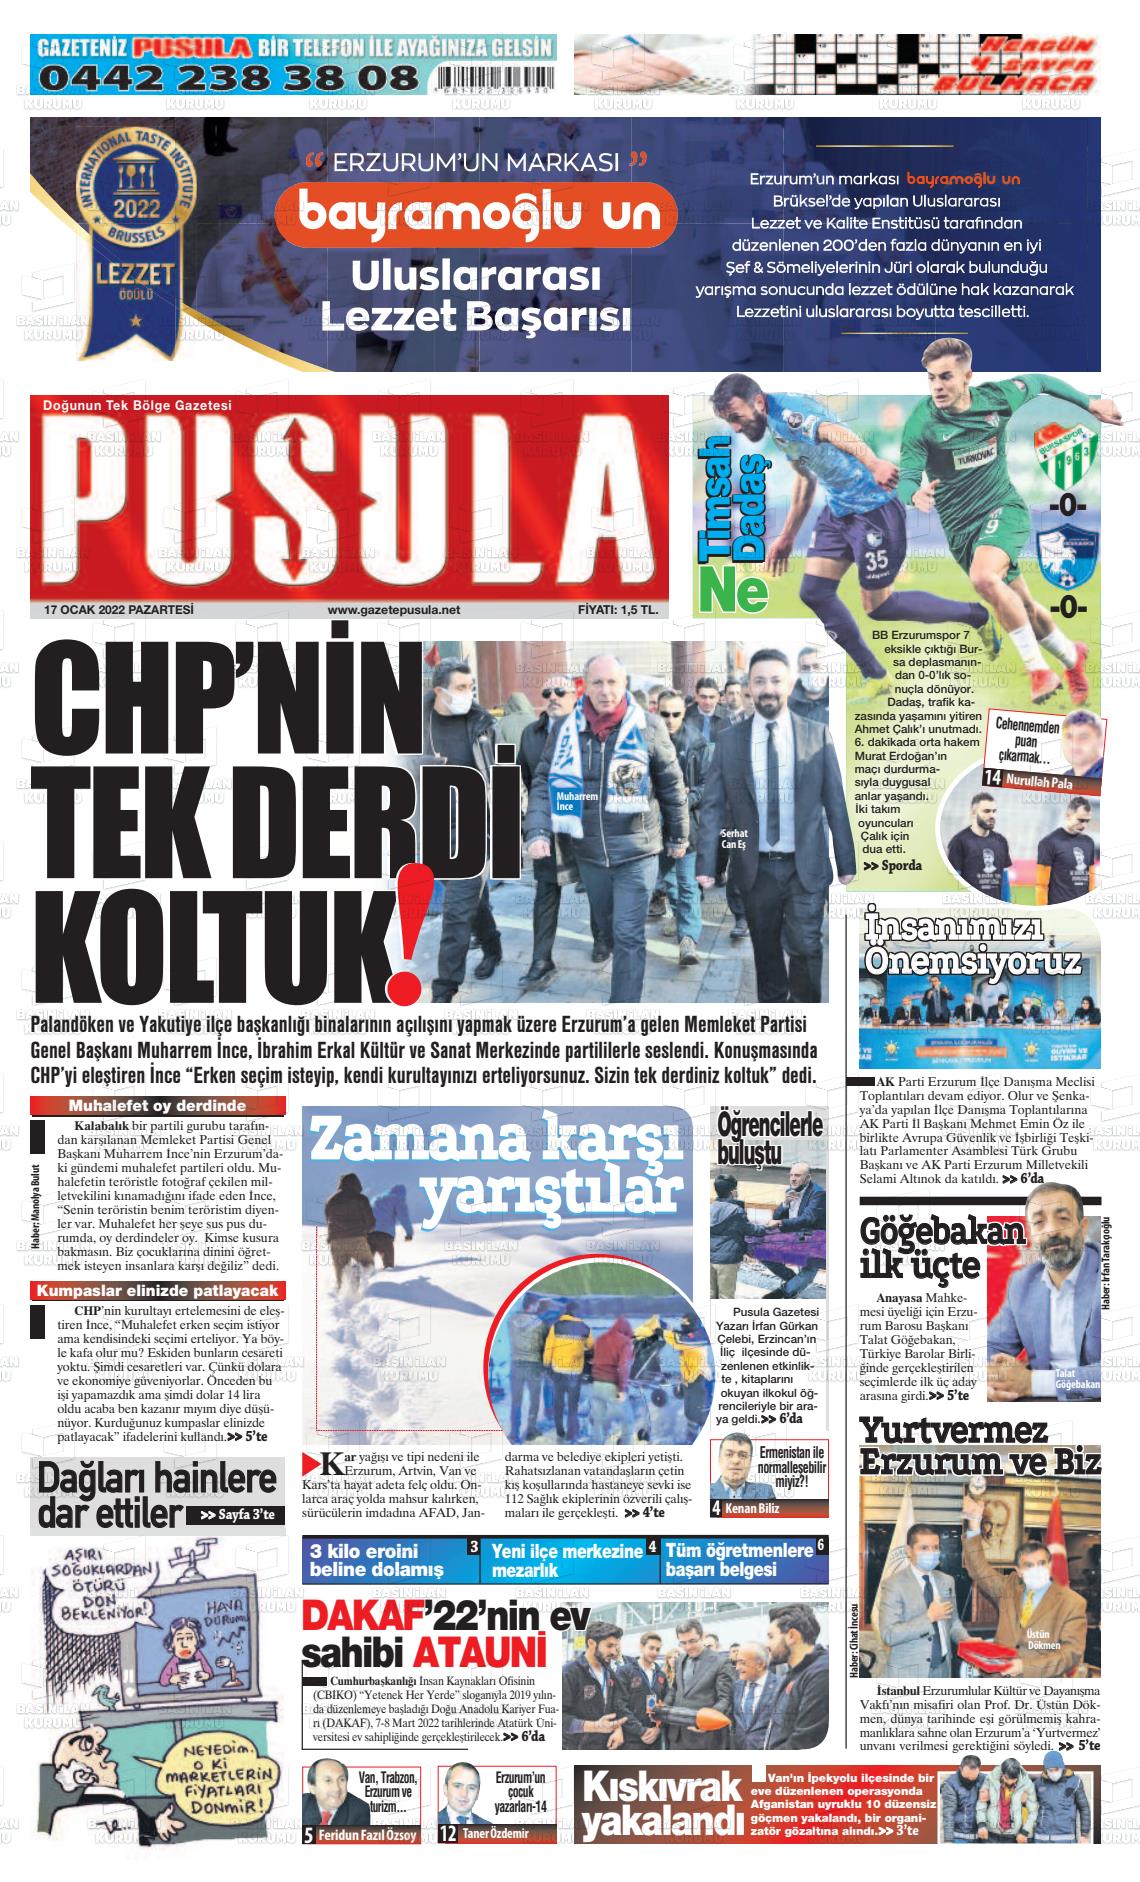 17 Ocak 2022 Erzurum Pusula Gazete Manşeti